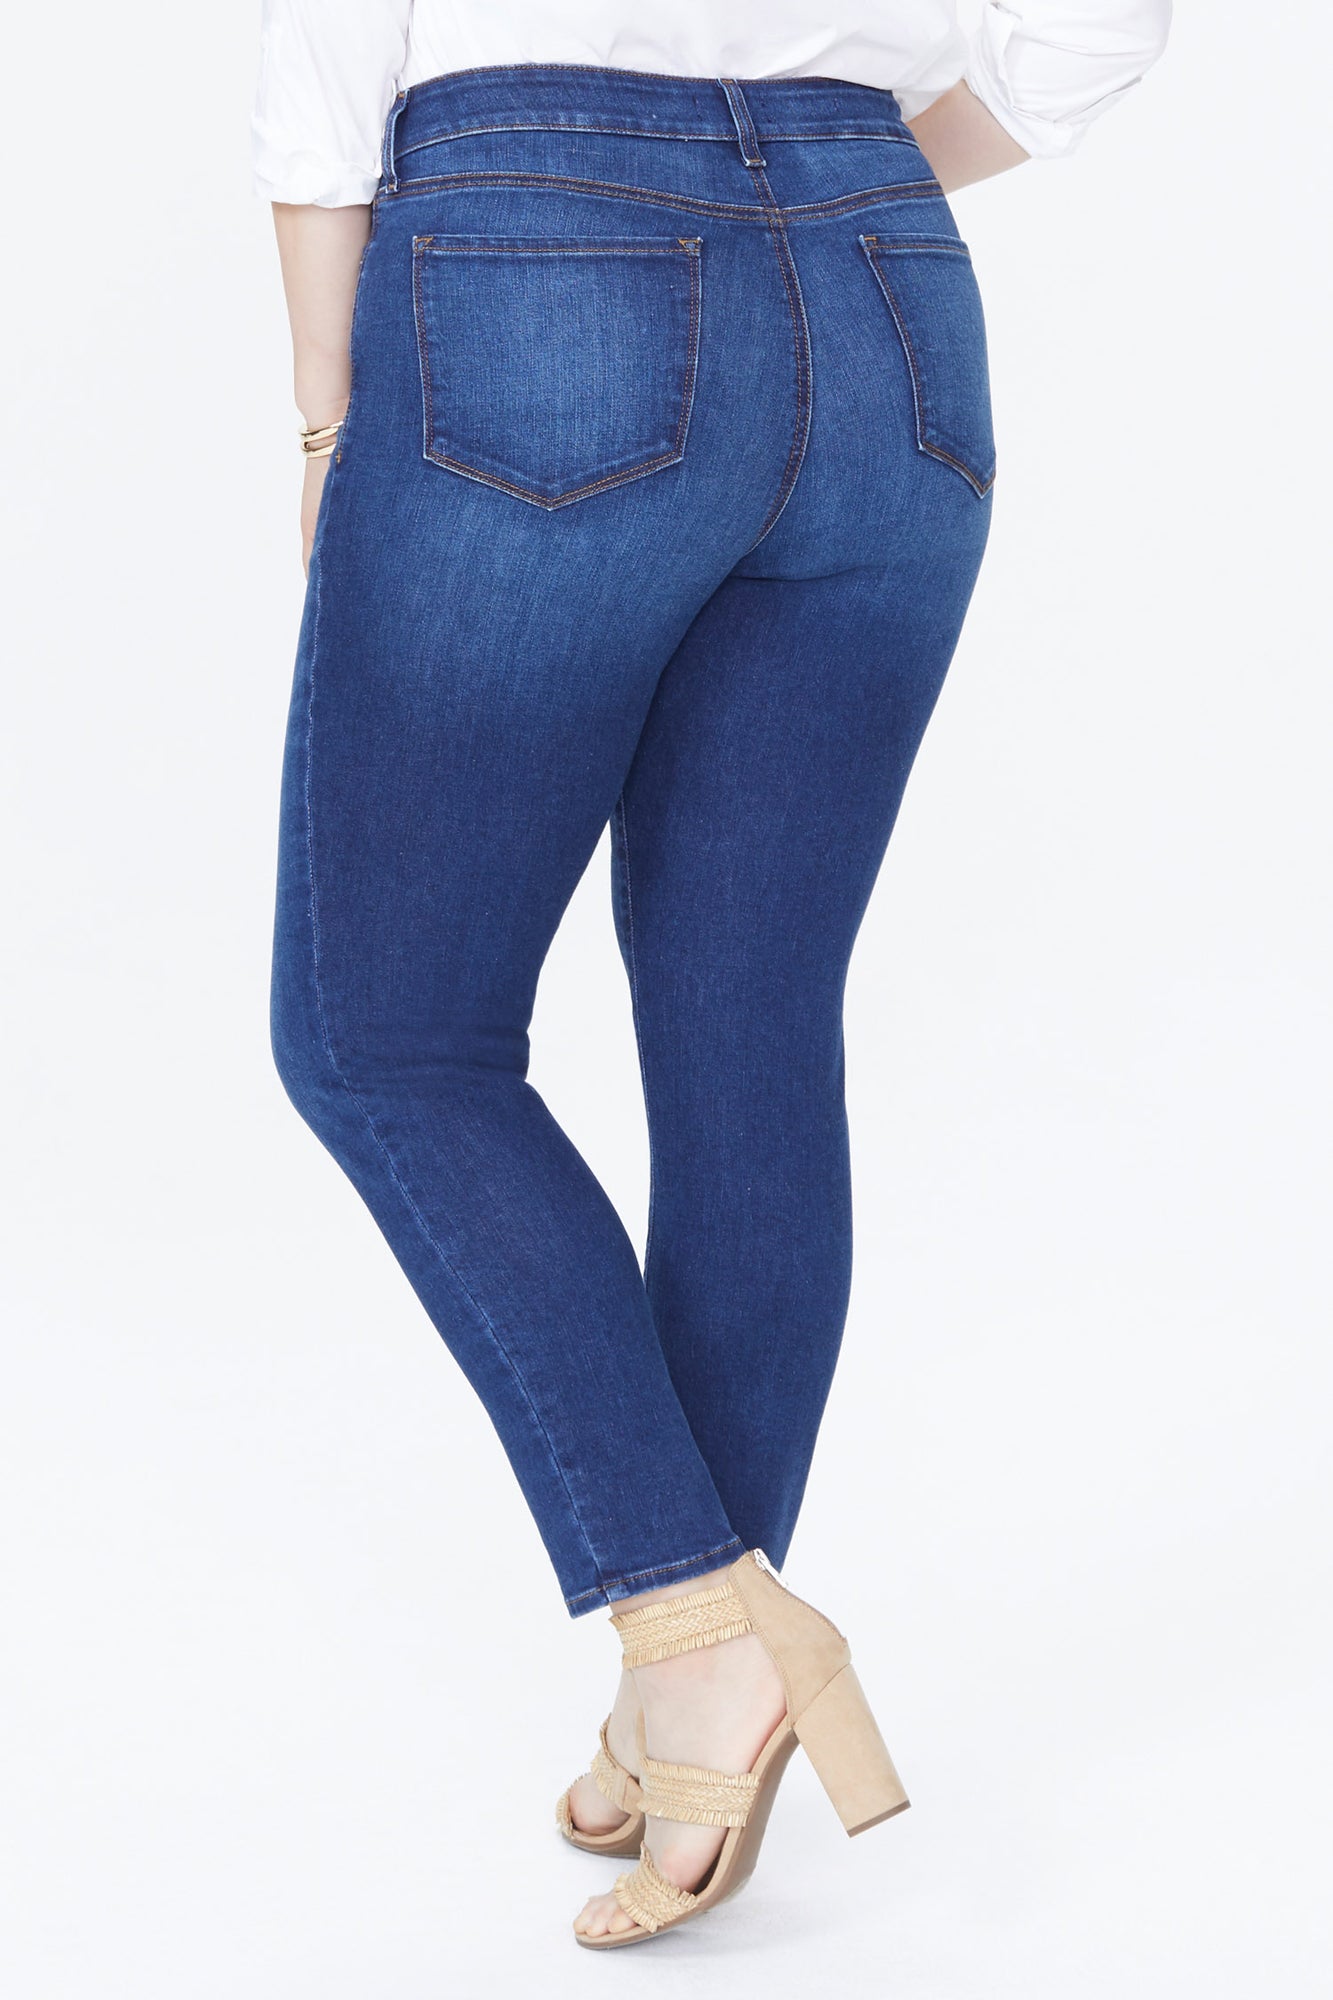 Ami Skinny Jeans In Plus Size - Cooper Blue | NYDJ